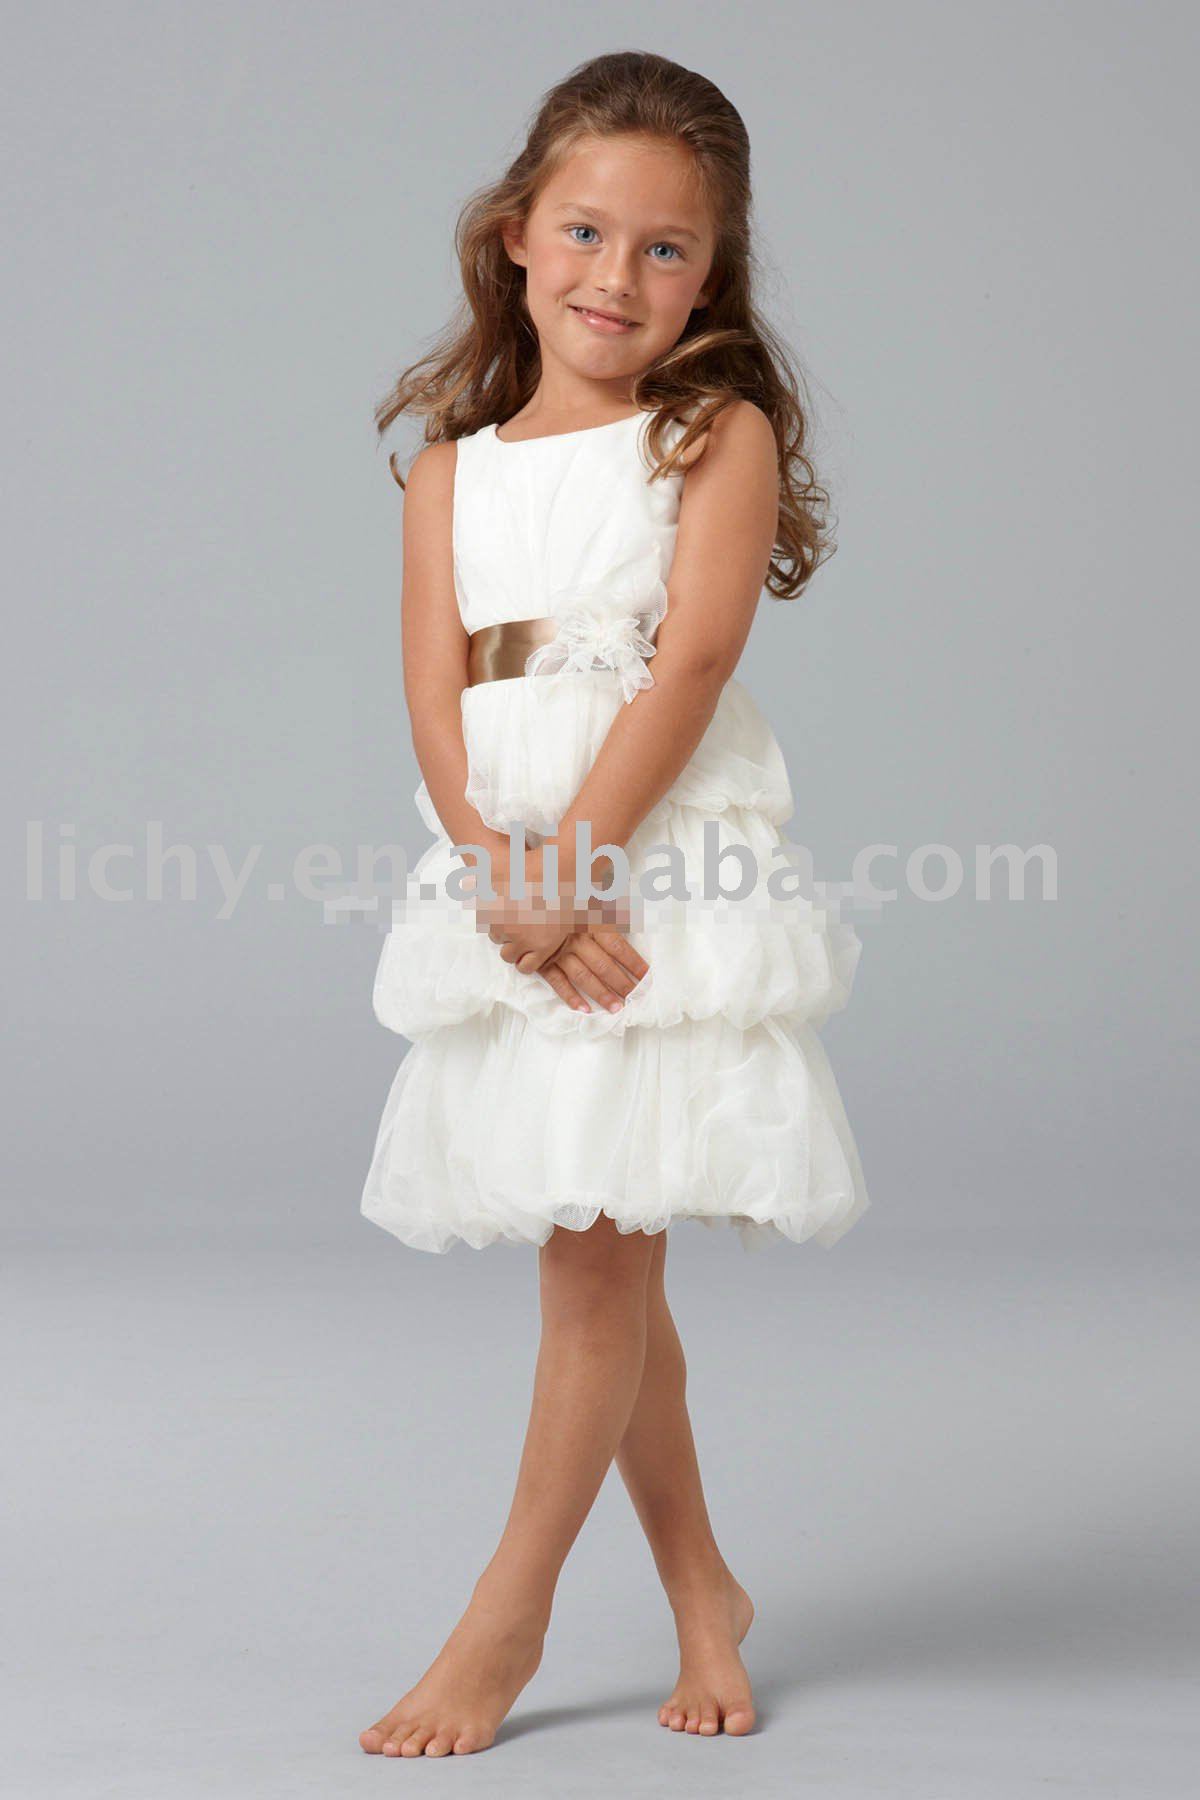 2010 Design Flower Childern's Dress , Party Girl Dress , Top Quality Kid Dress lya8256